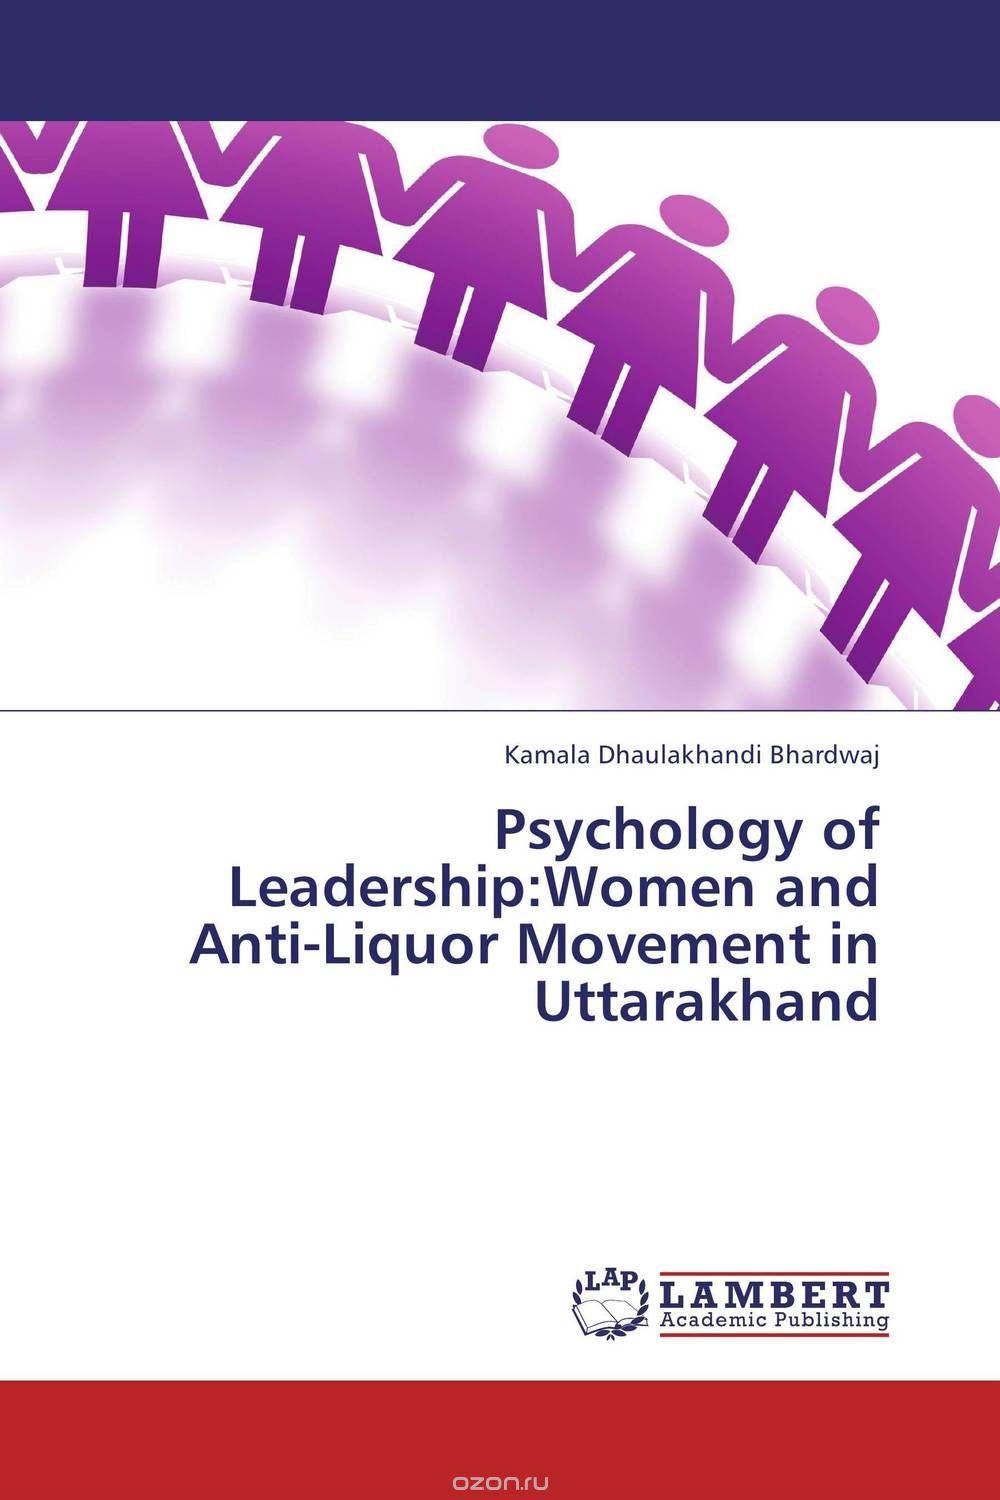 Скачать книгу "Psychology of Leadership:Women and Anti-Liquor Movement in Uttarakhand"